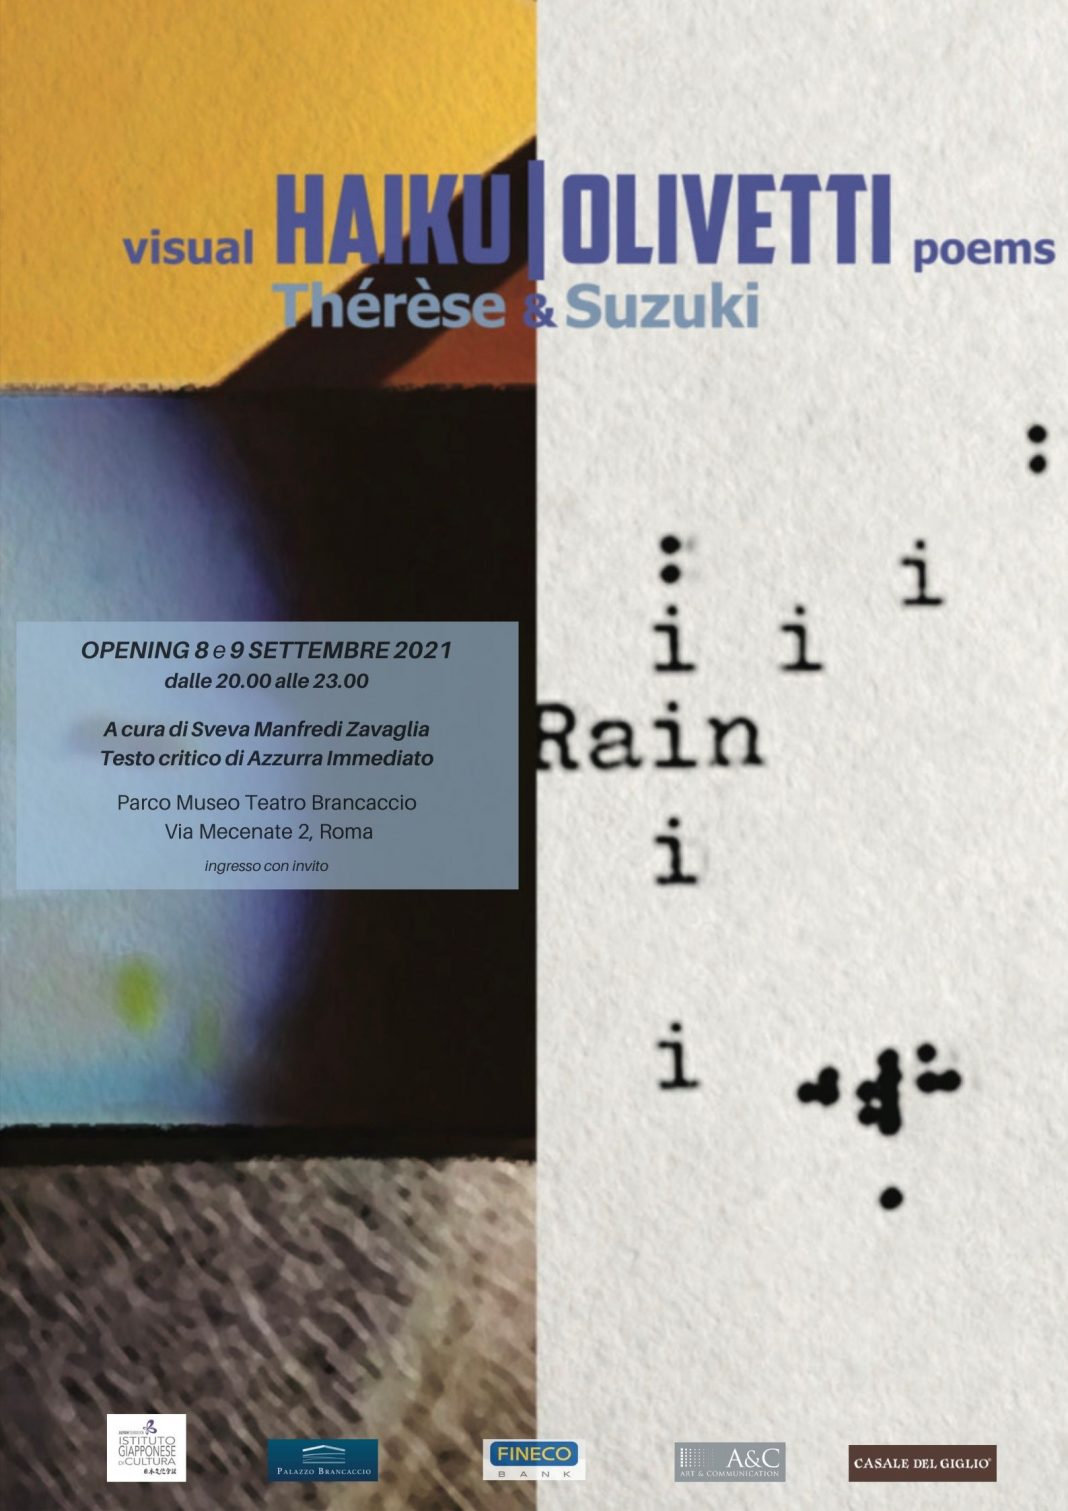 Francesco Thérèse / Hiromi Suzuki visual – HAIKU | OLIVETTI poemshttps://www.exibart.com/repository/media/formidable/11/img/d2a/visual-HAIKU_OLIVETTI-poems_Opening-1068x1511.jpg